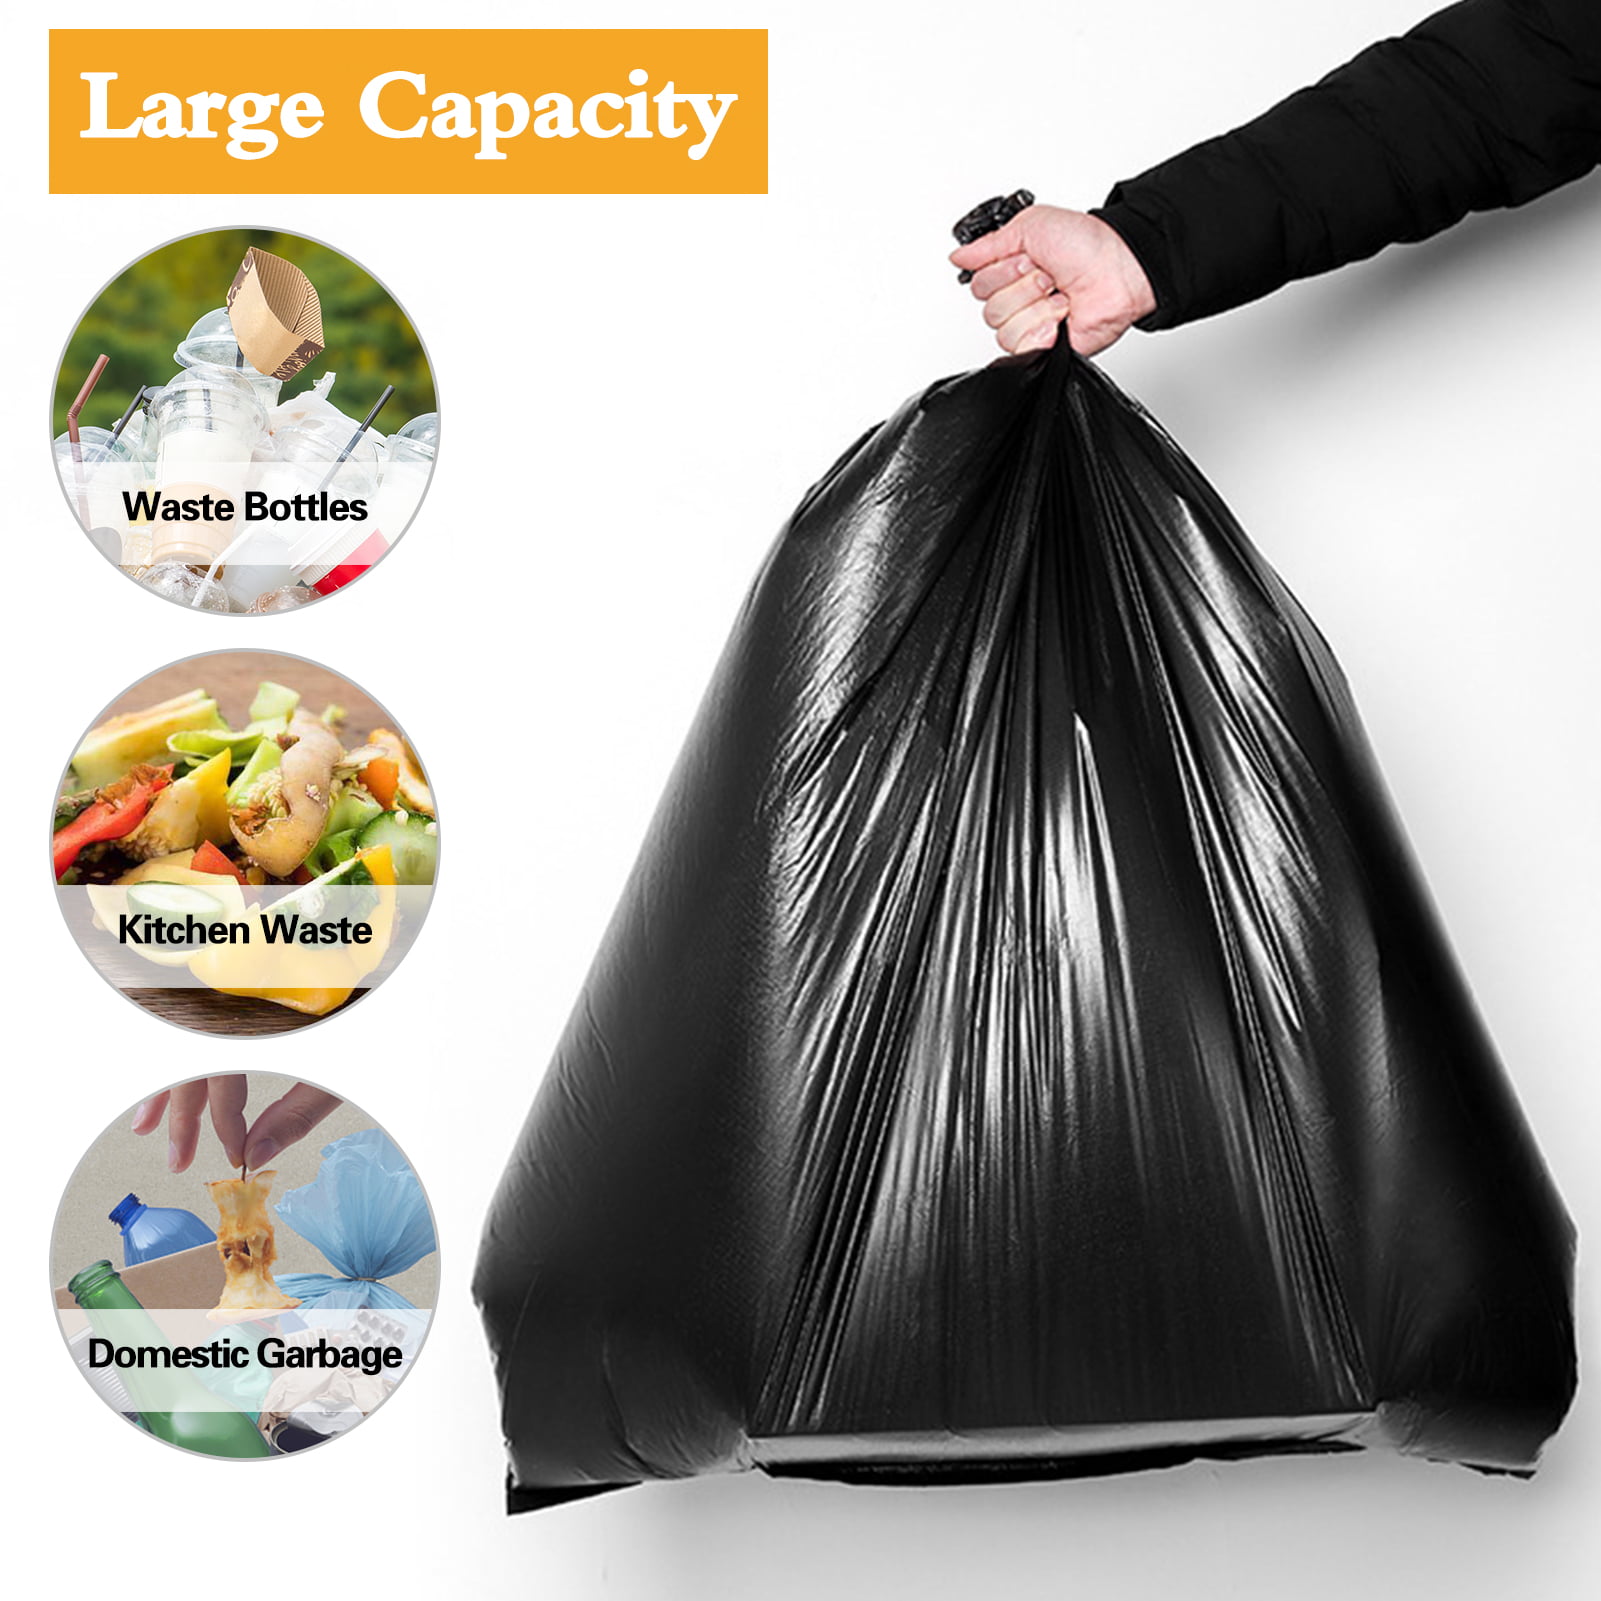 Konelia 33 Gallons Plastic Trash Bags - 50 Count